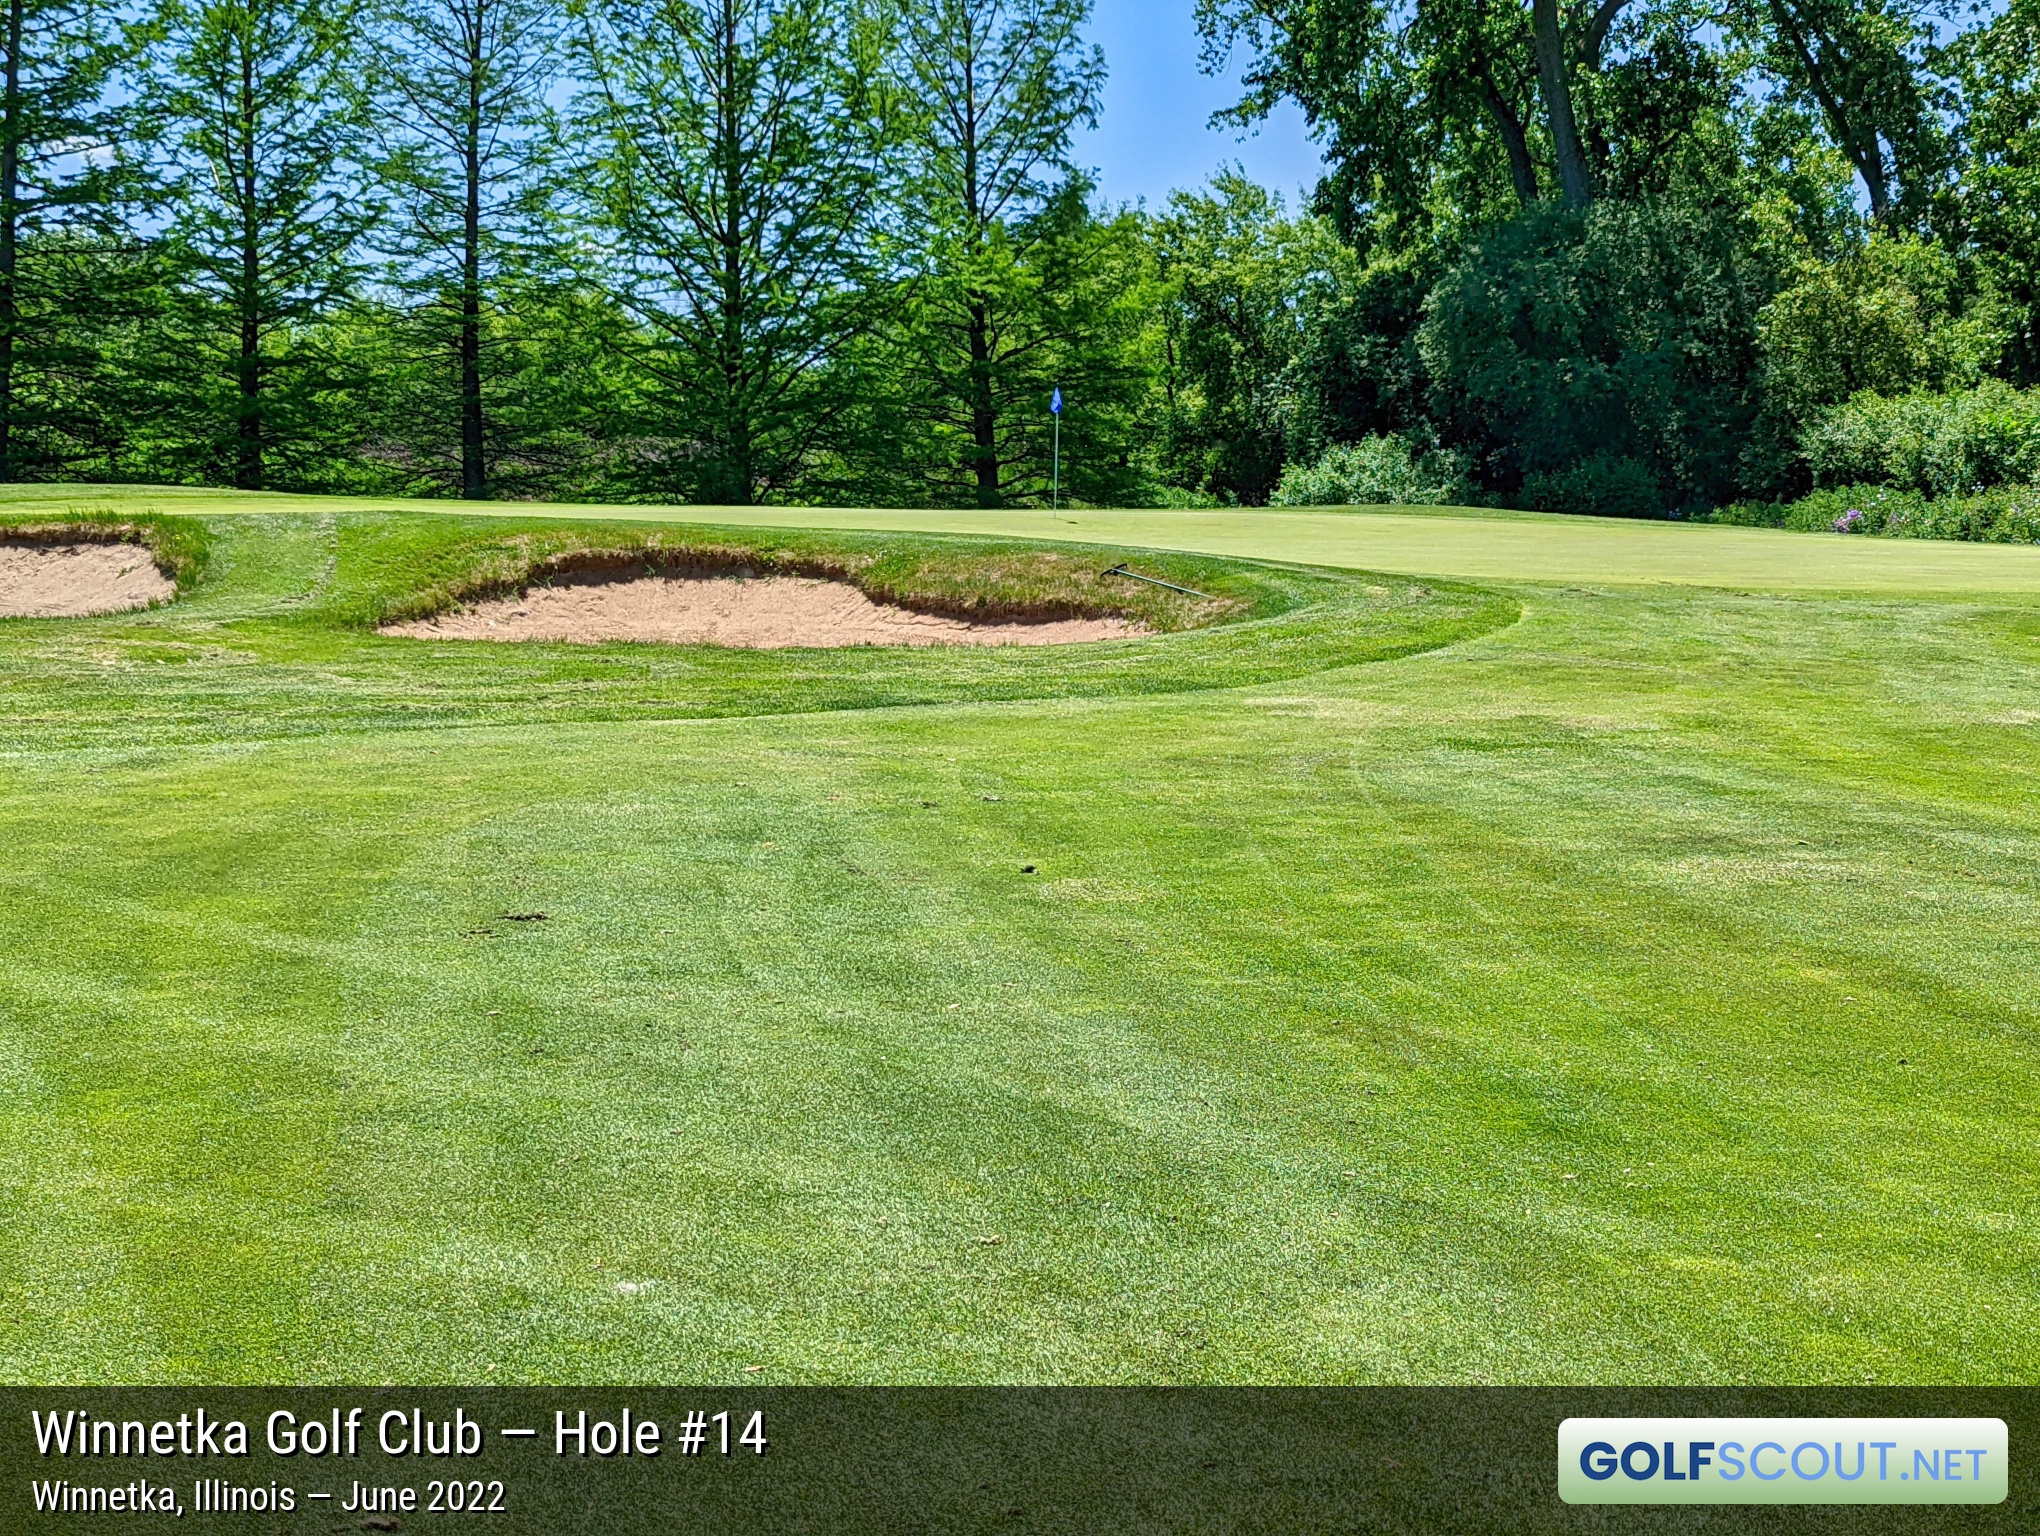 Photo of hole #14 at Winnetka Golf Club in Winnetka, Illinois. 